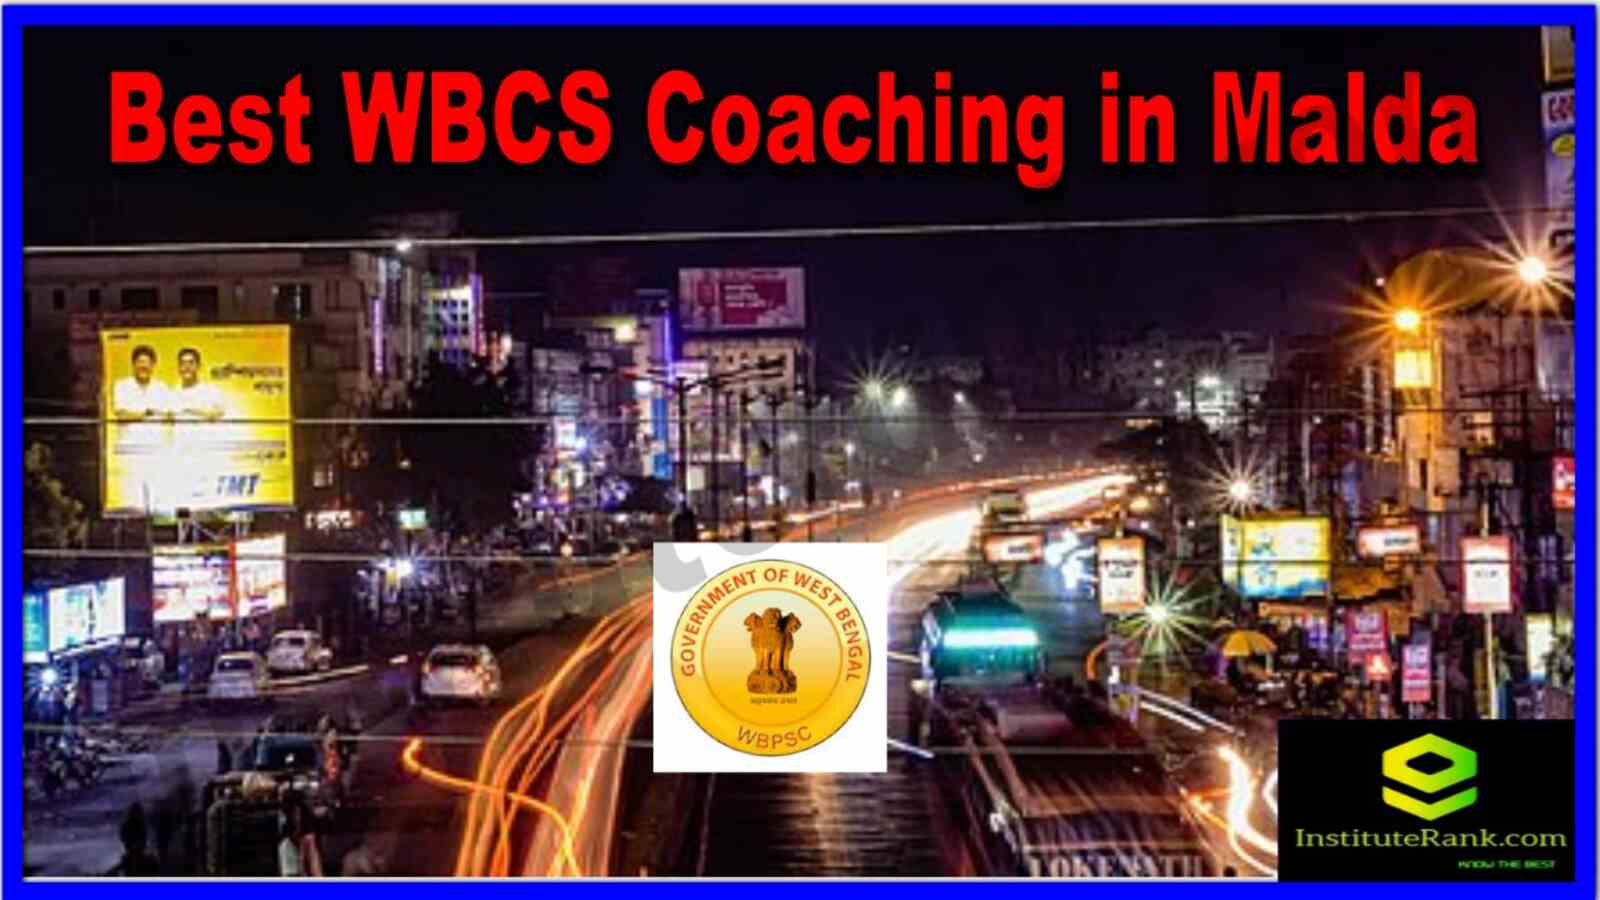 Best WBCS Coaching in Malda